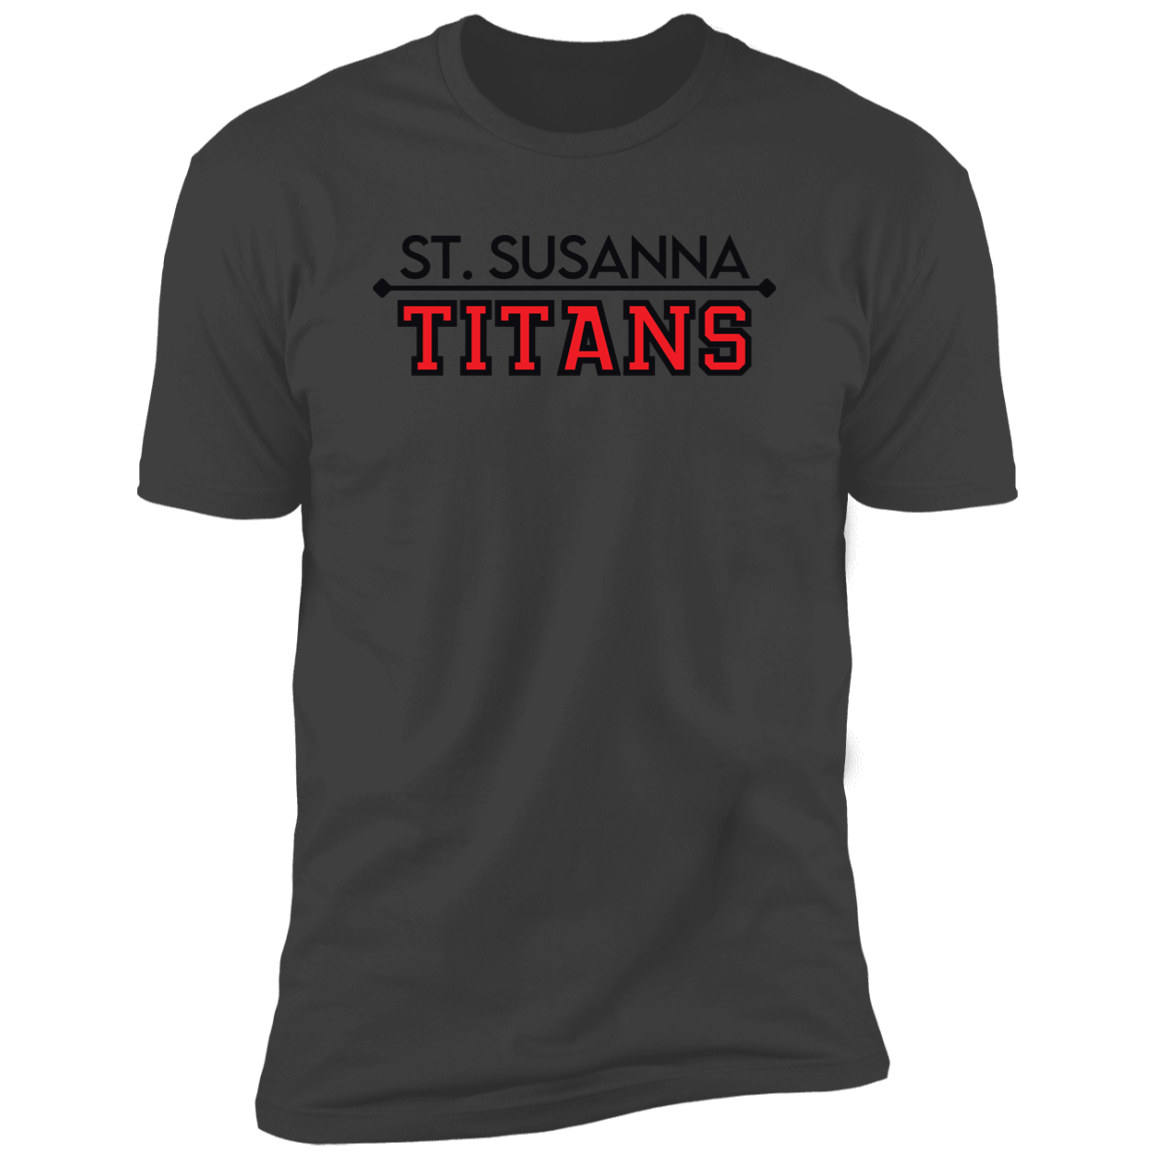 St. Susanna Titans (black/red) Unisex Premium Short Sleeve T-Shirt